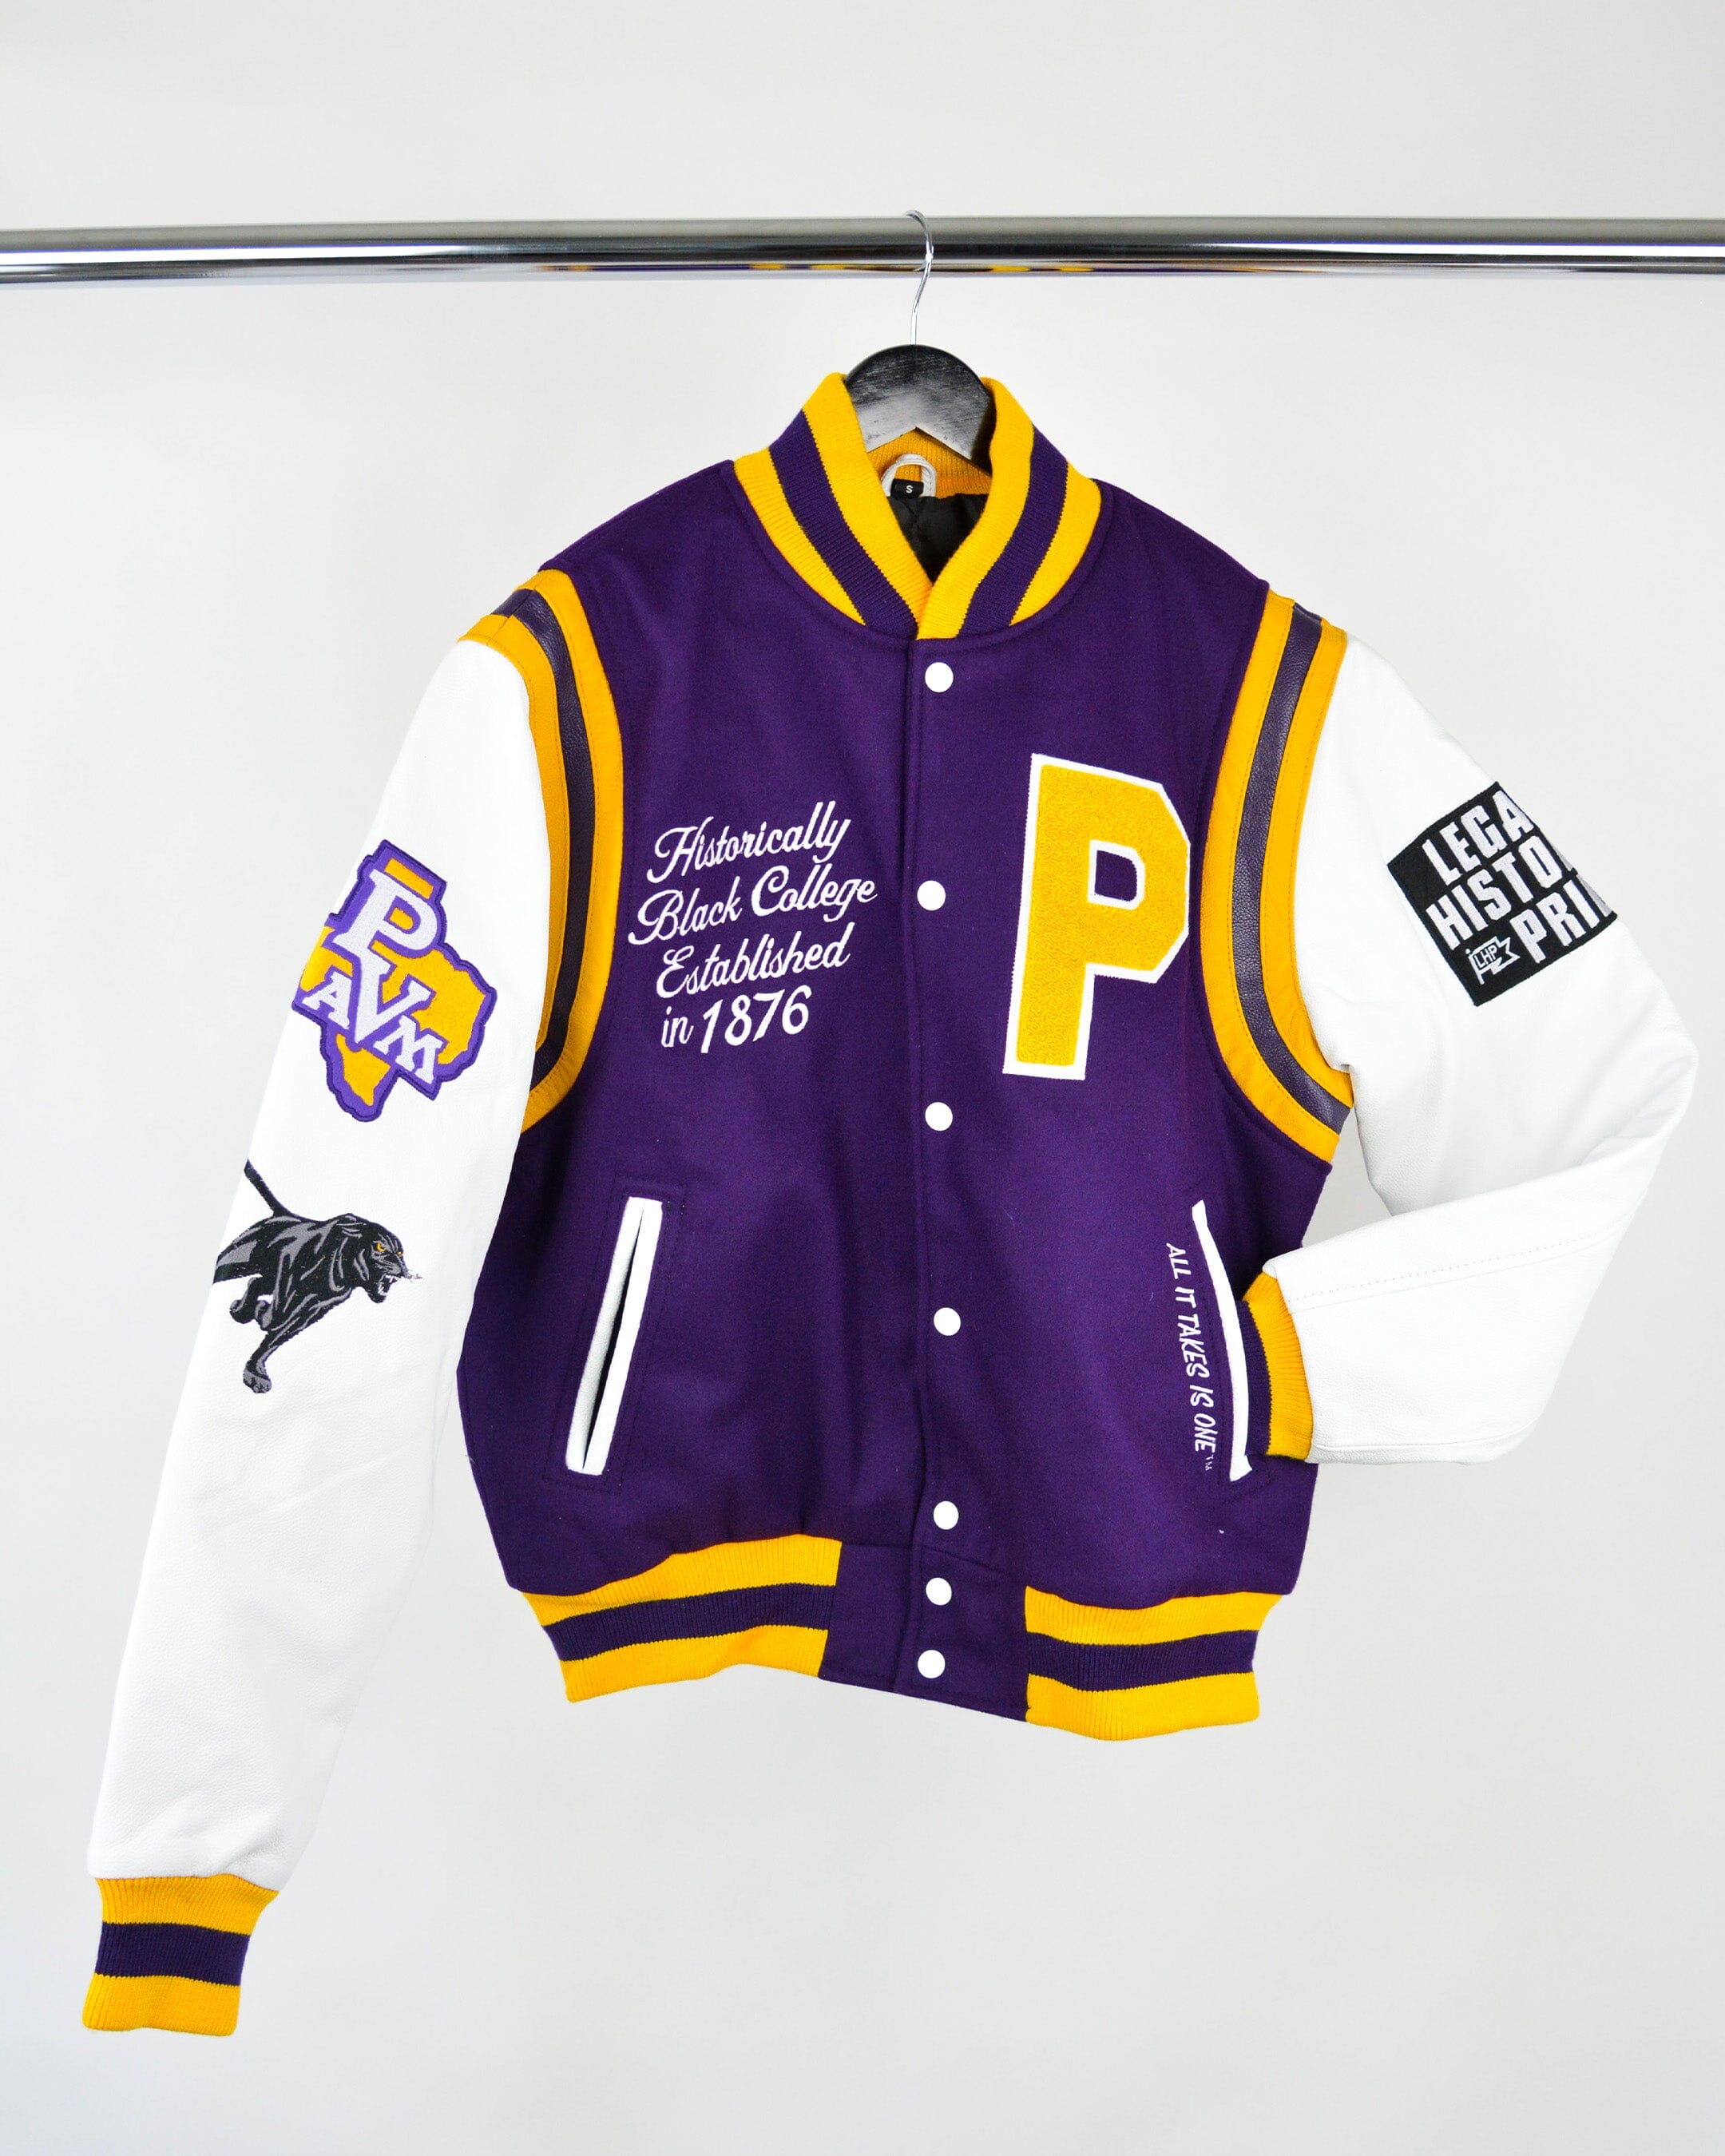 Loyalty LA Lakers Varsity Purple and White Jacket